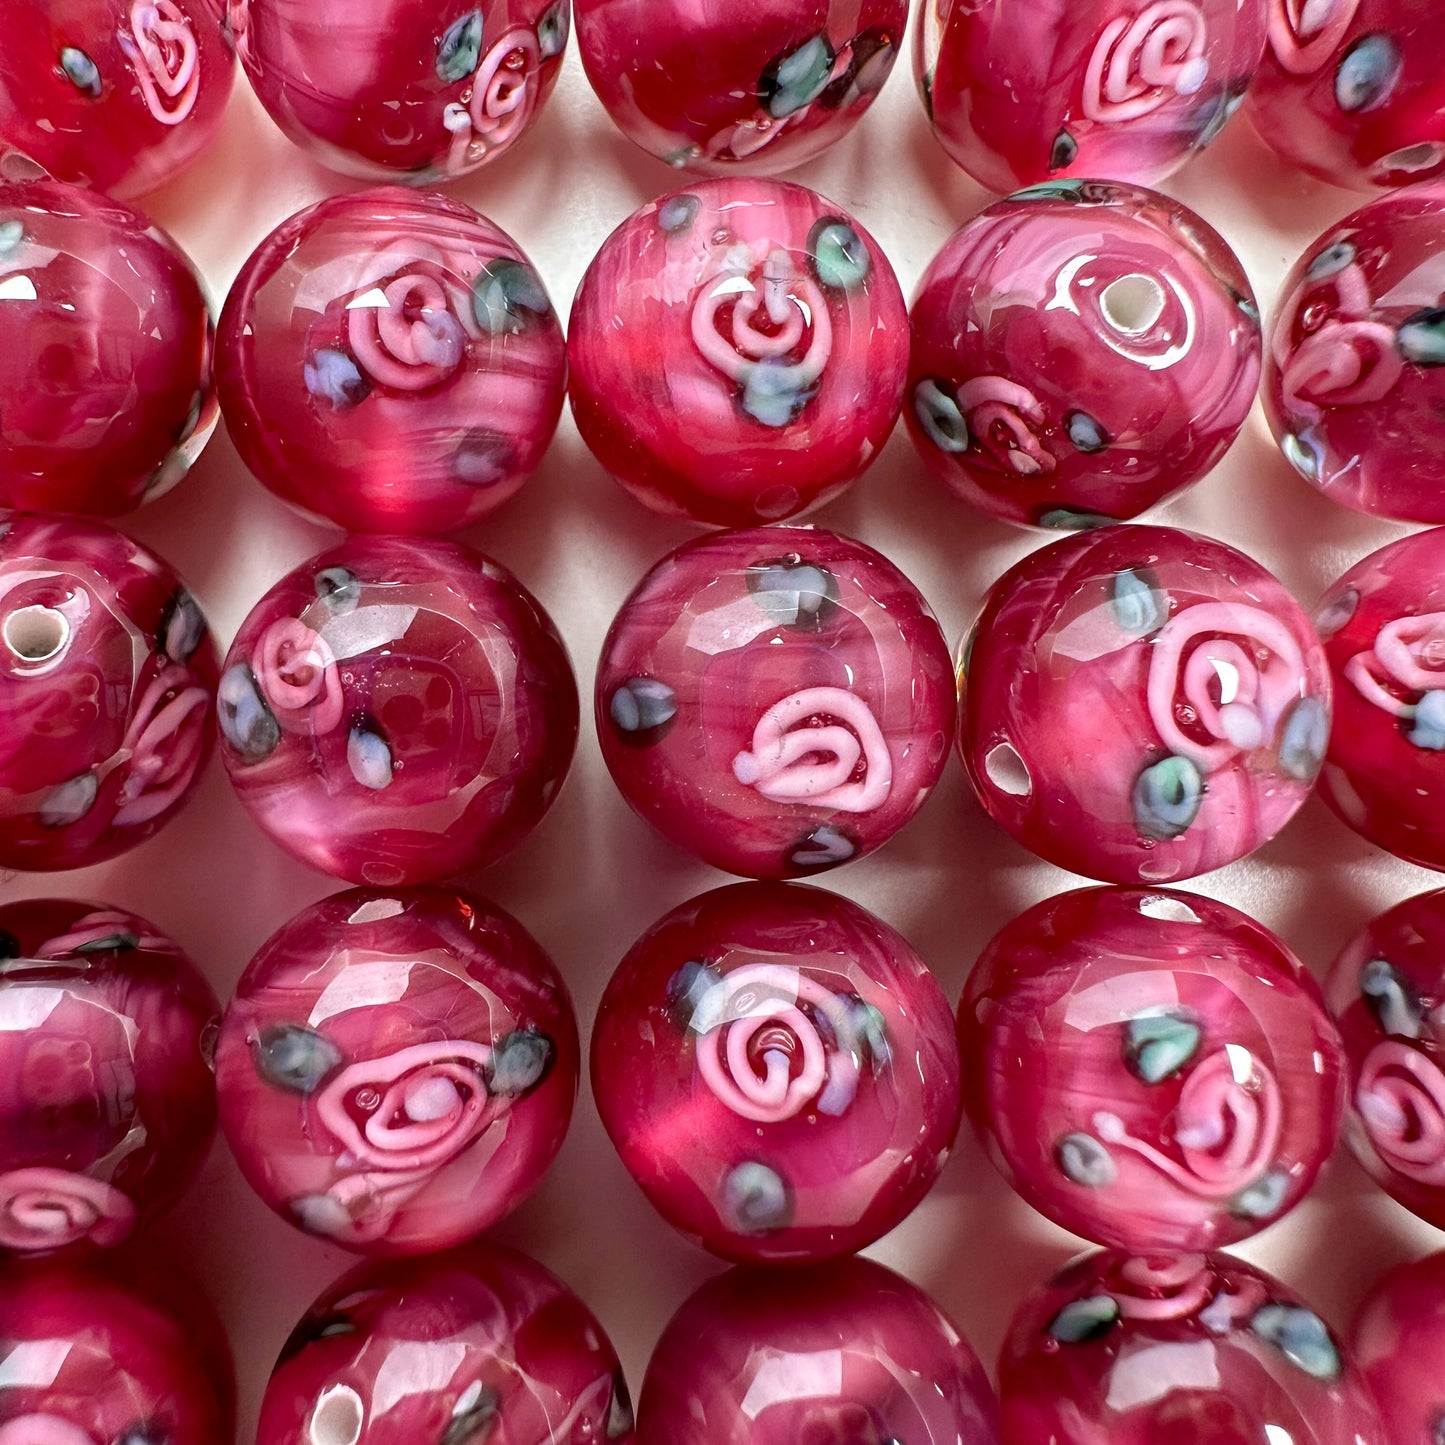 10mm Czech Lampwork Cranberry Bead with Rosette Flowers - 2 pcs.-The Bead Gallery Honolulu